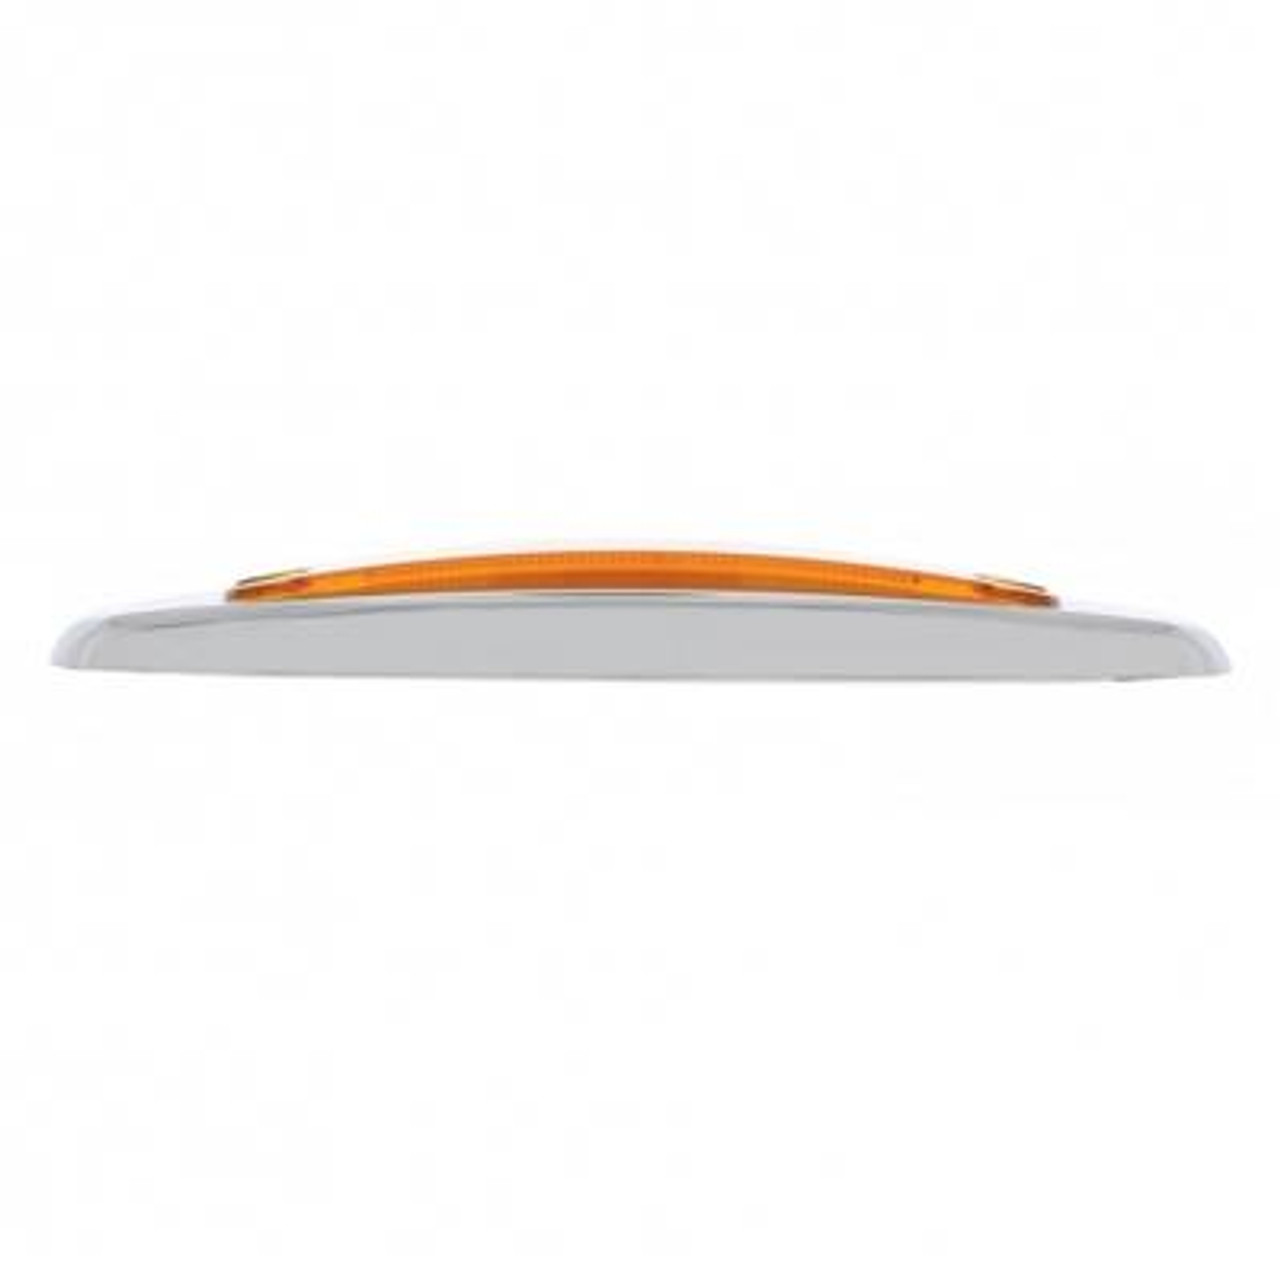 16 LED Rectangular GloLight With Bezel (Clearance/Marker) - Amber LED/Amber Lens